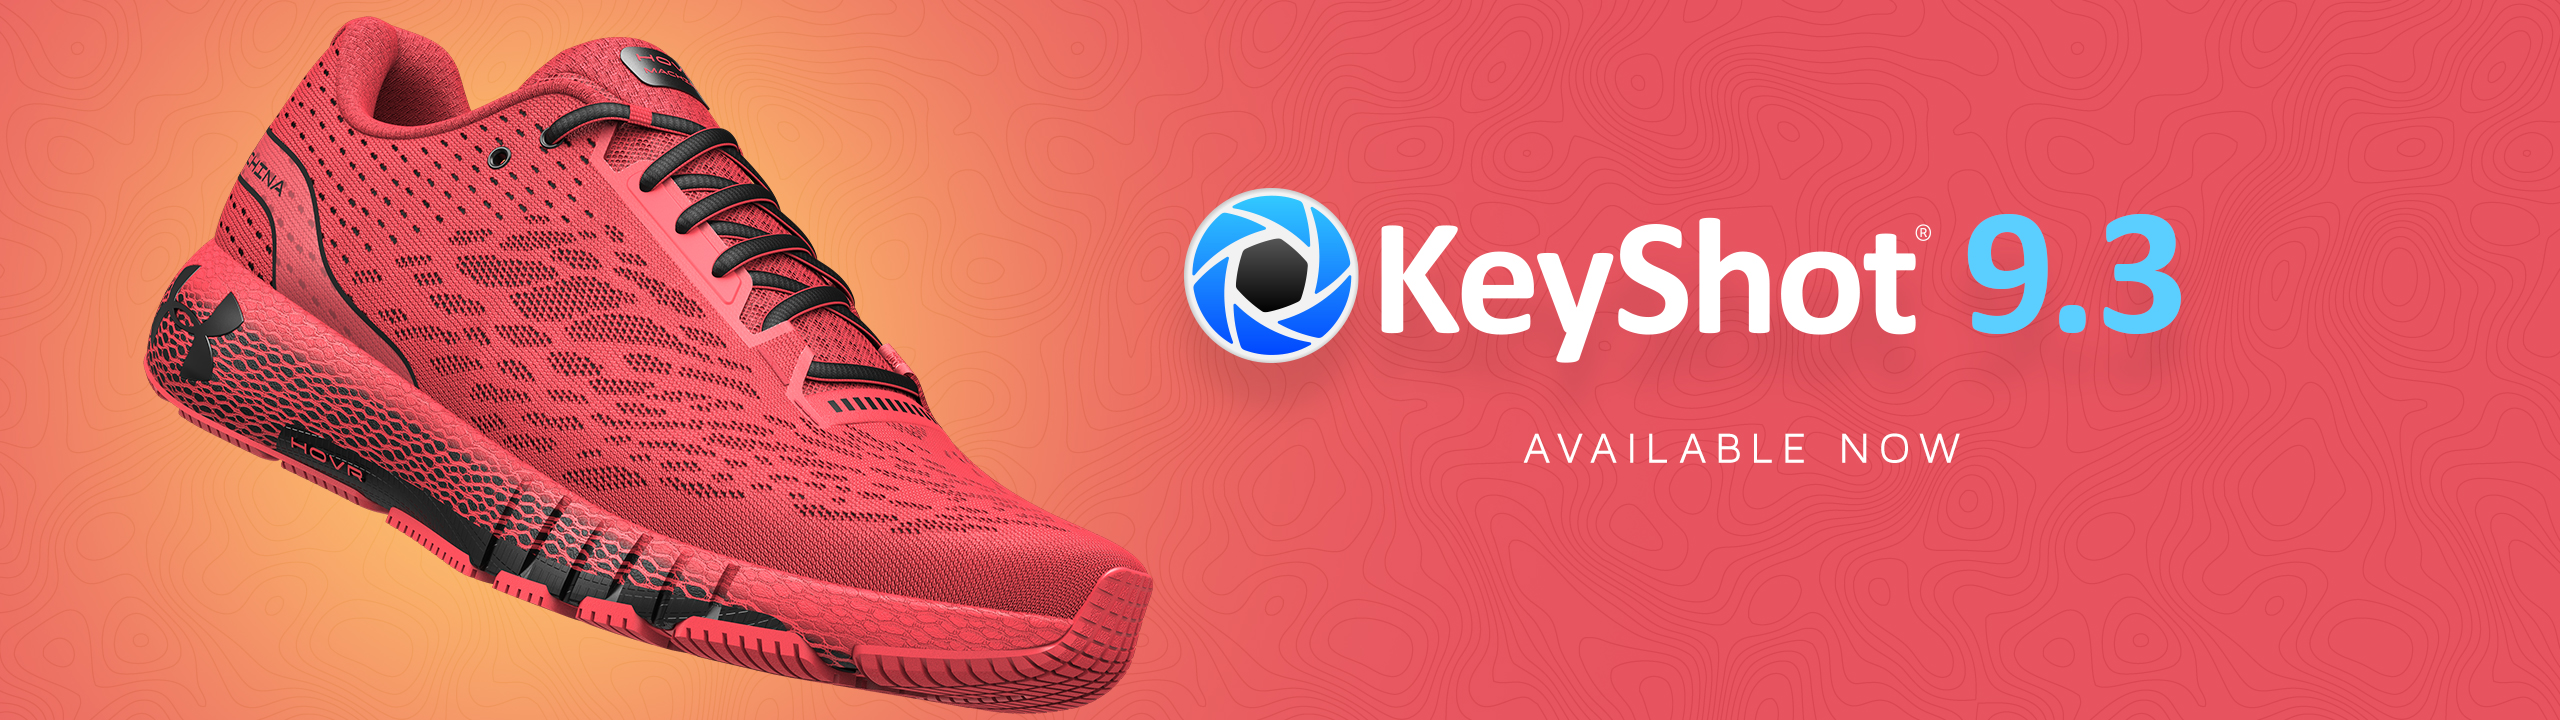 KeyShot 9.3 Now Available